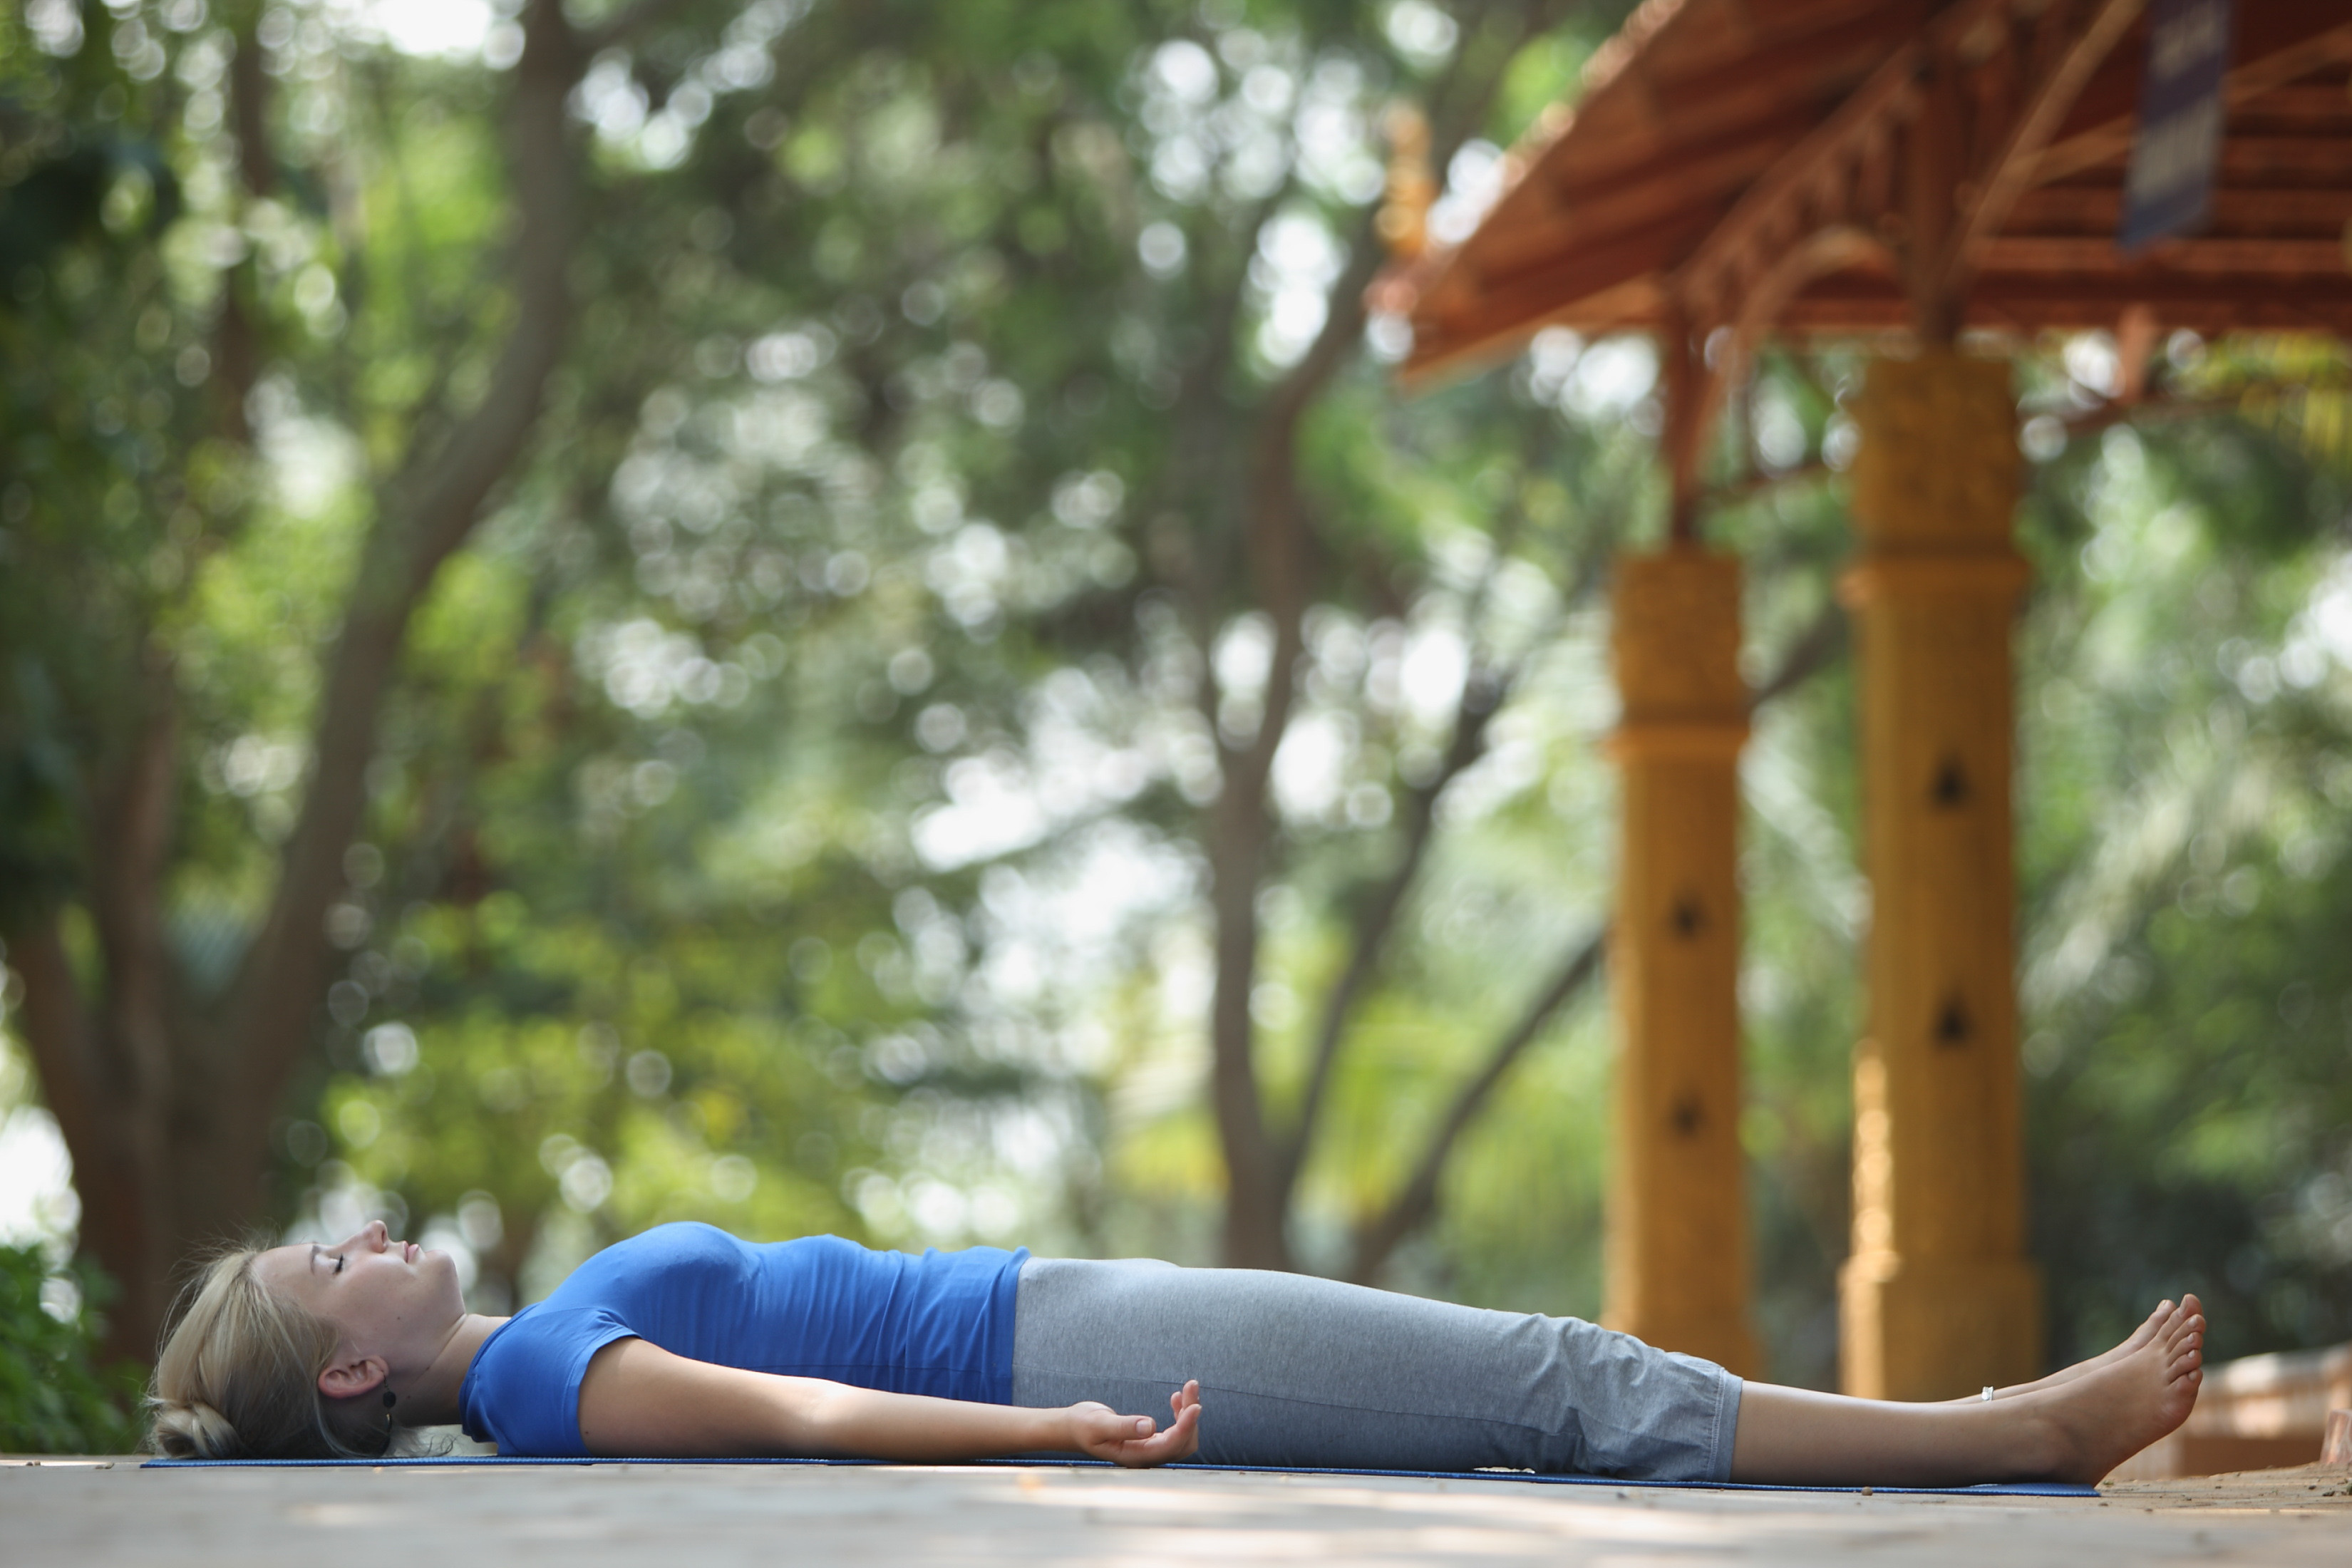 Yoga nidra posture (Yogic sleep) for beginners